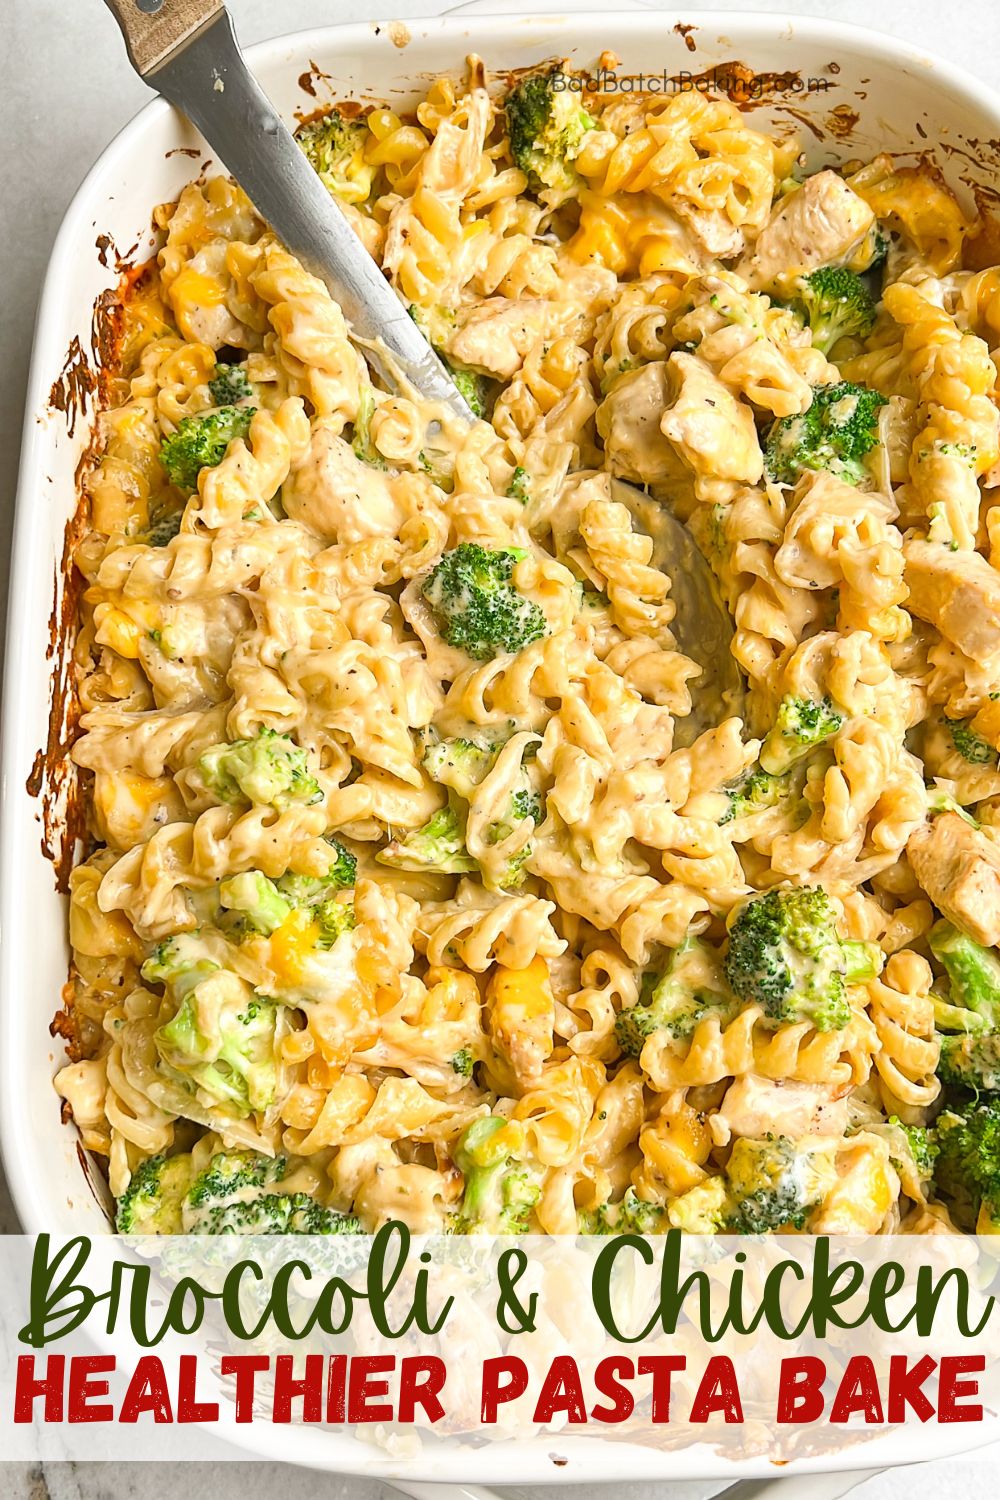 Broccoli chicken pasta bake